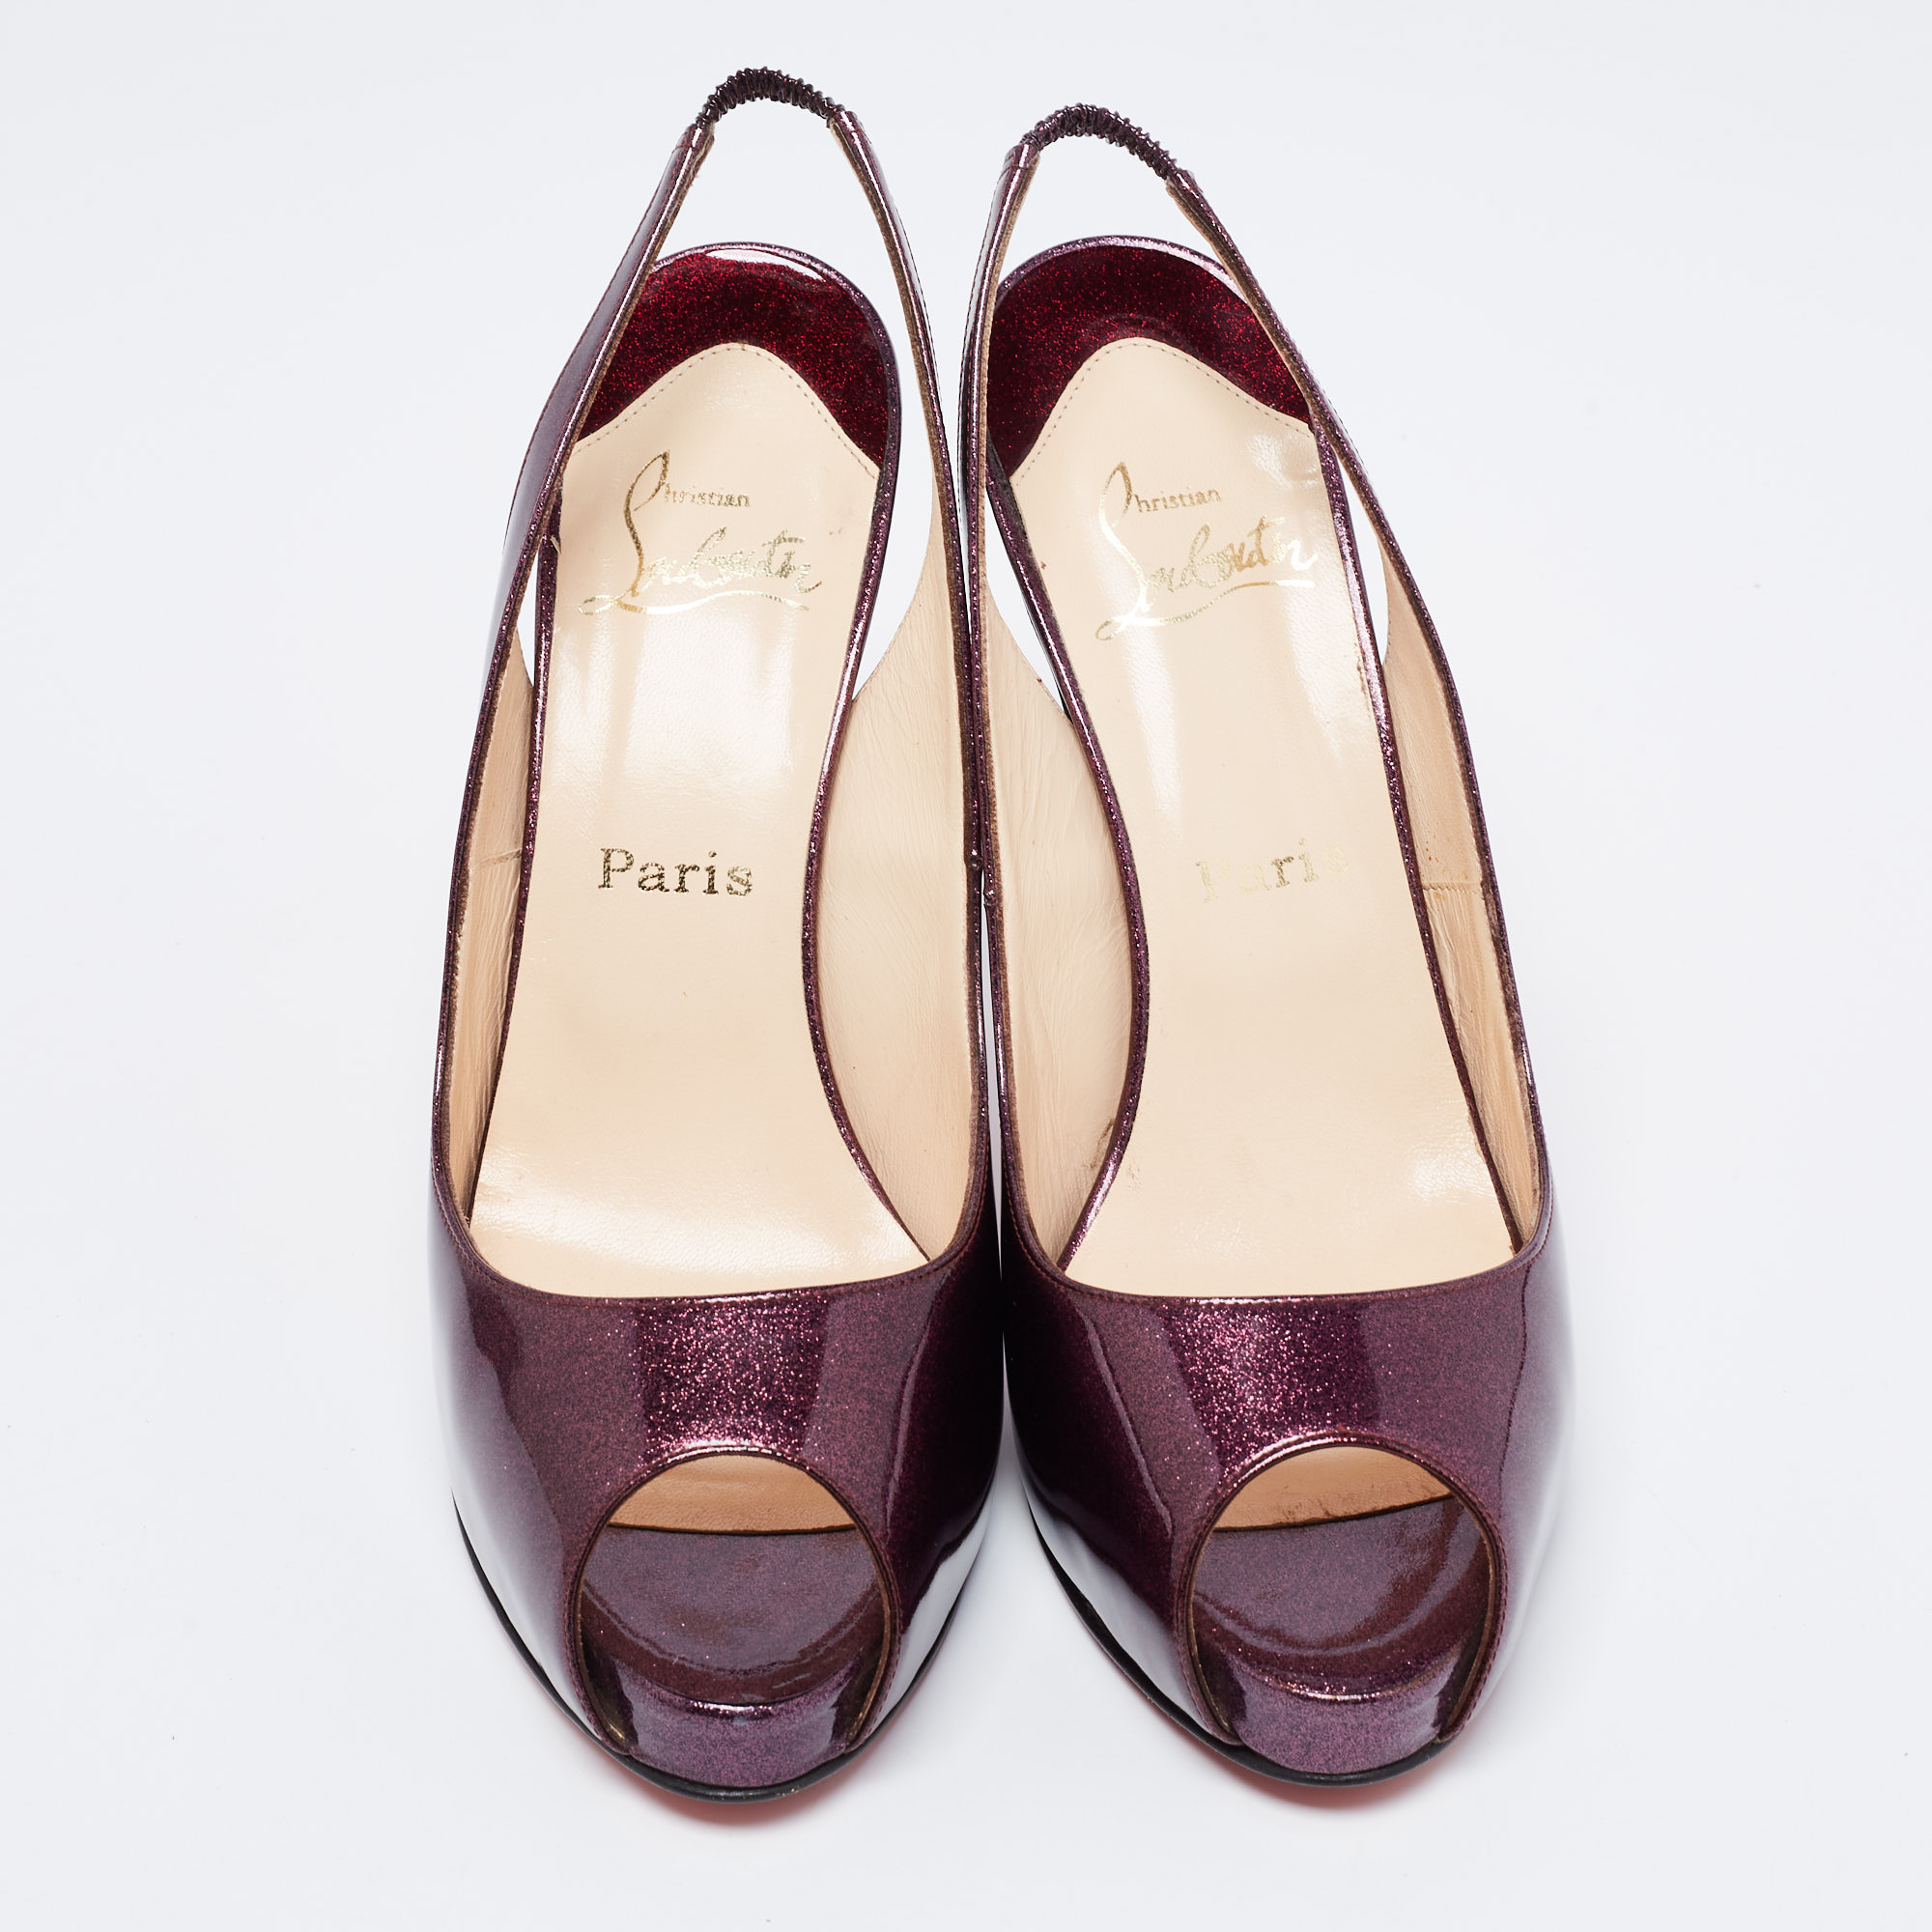 Christian Louboutin Purple Glitter Patent Leather No Prive Peep-Toe Slingback Sandals Size 41